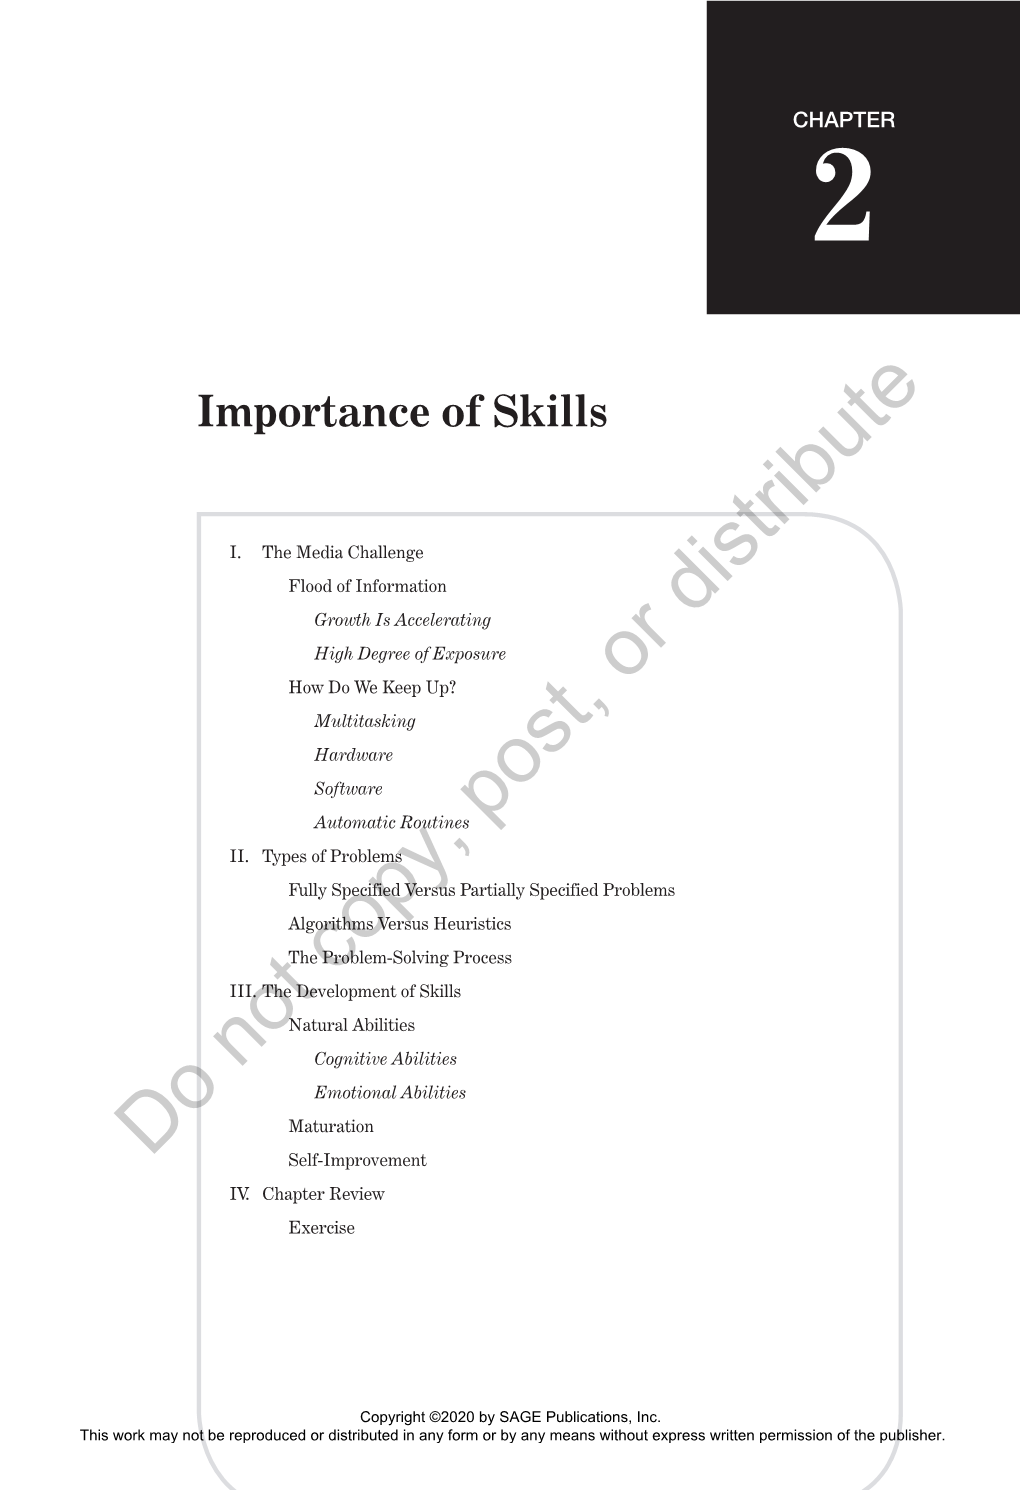 Importance of Skills